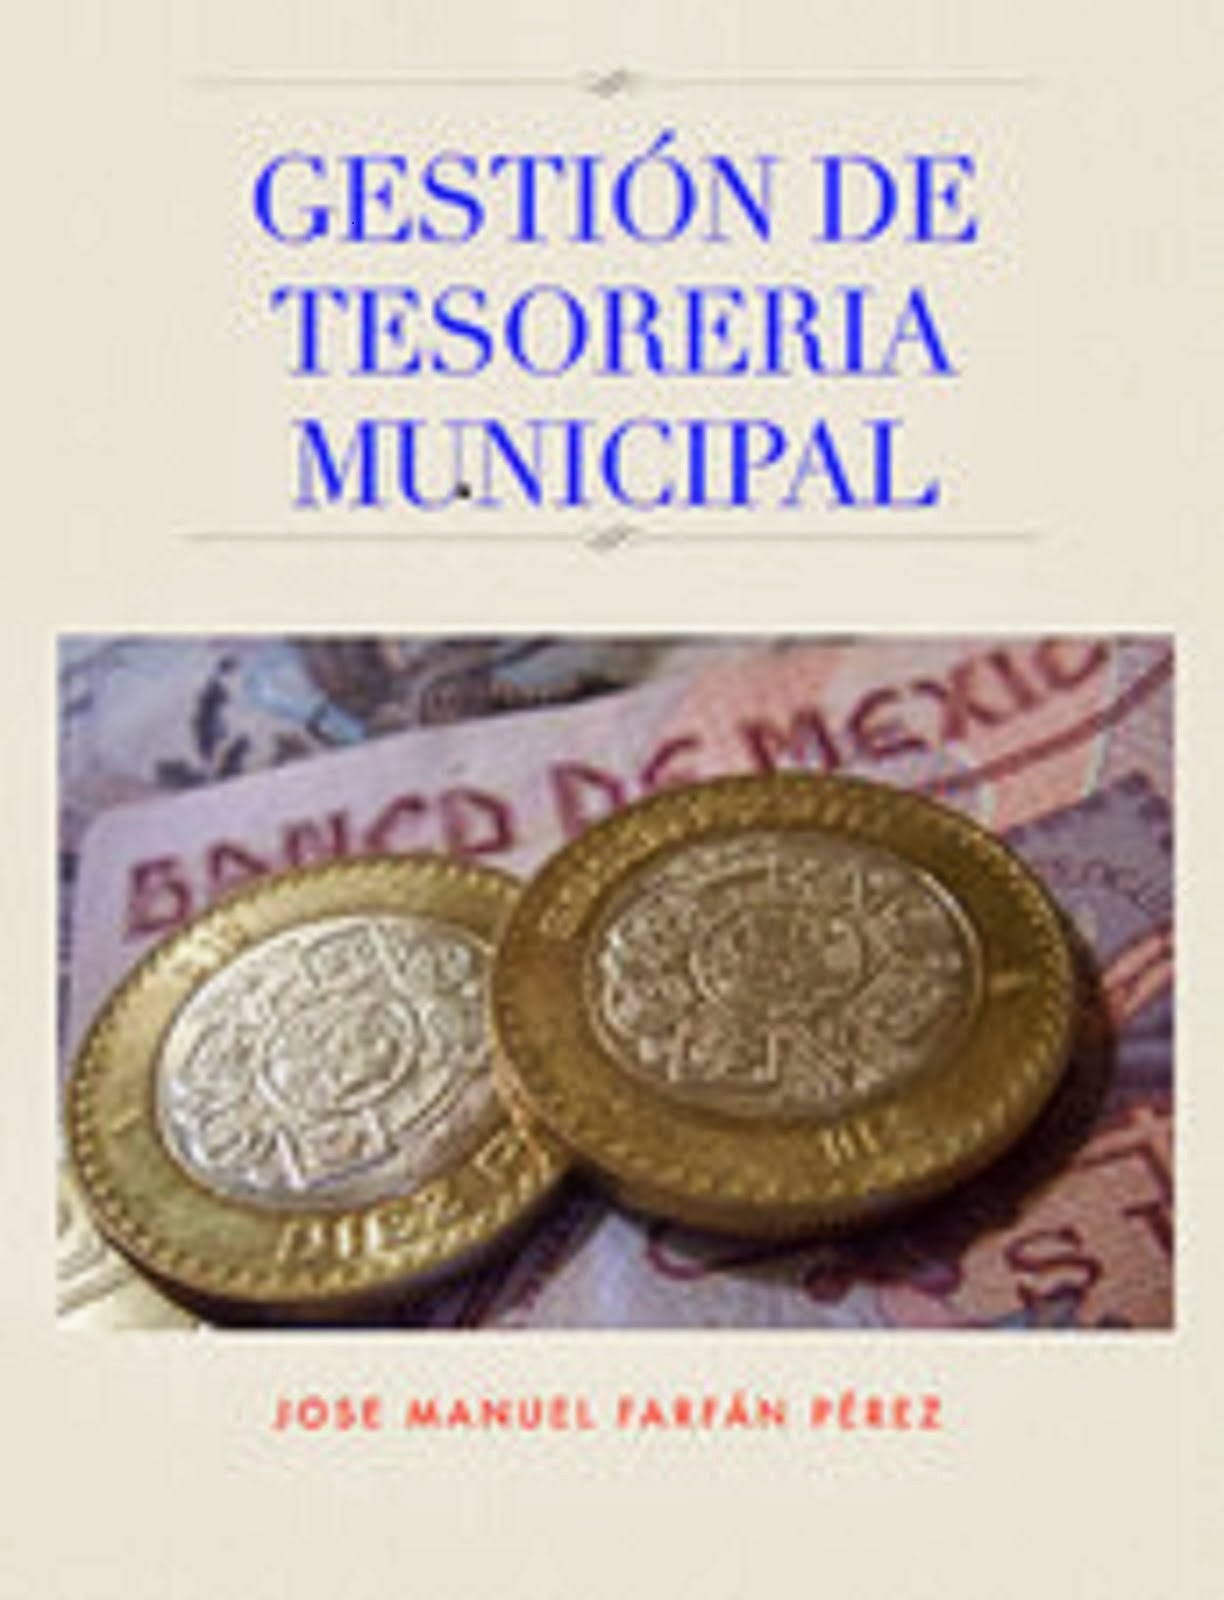 GESTIÓN DE TESORERÍA MUNICIPAL